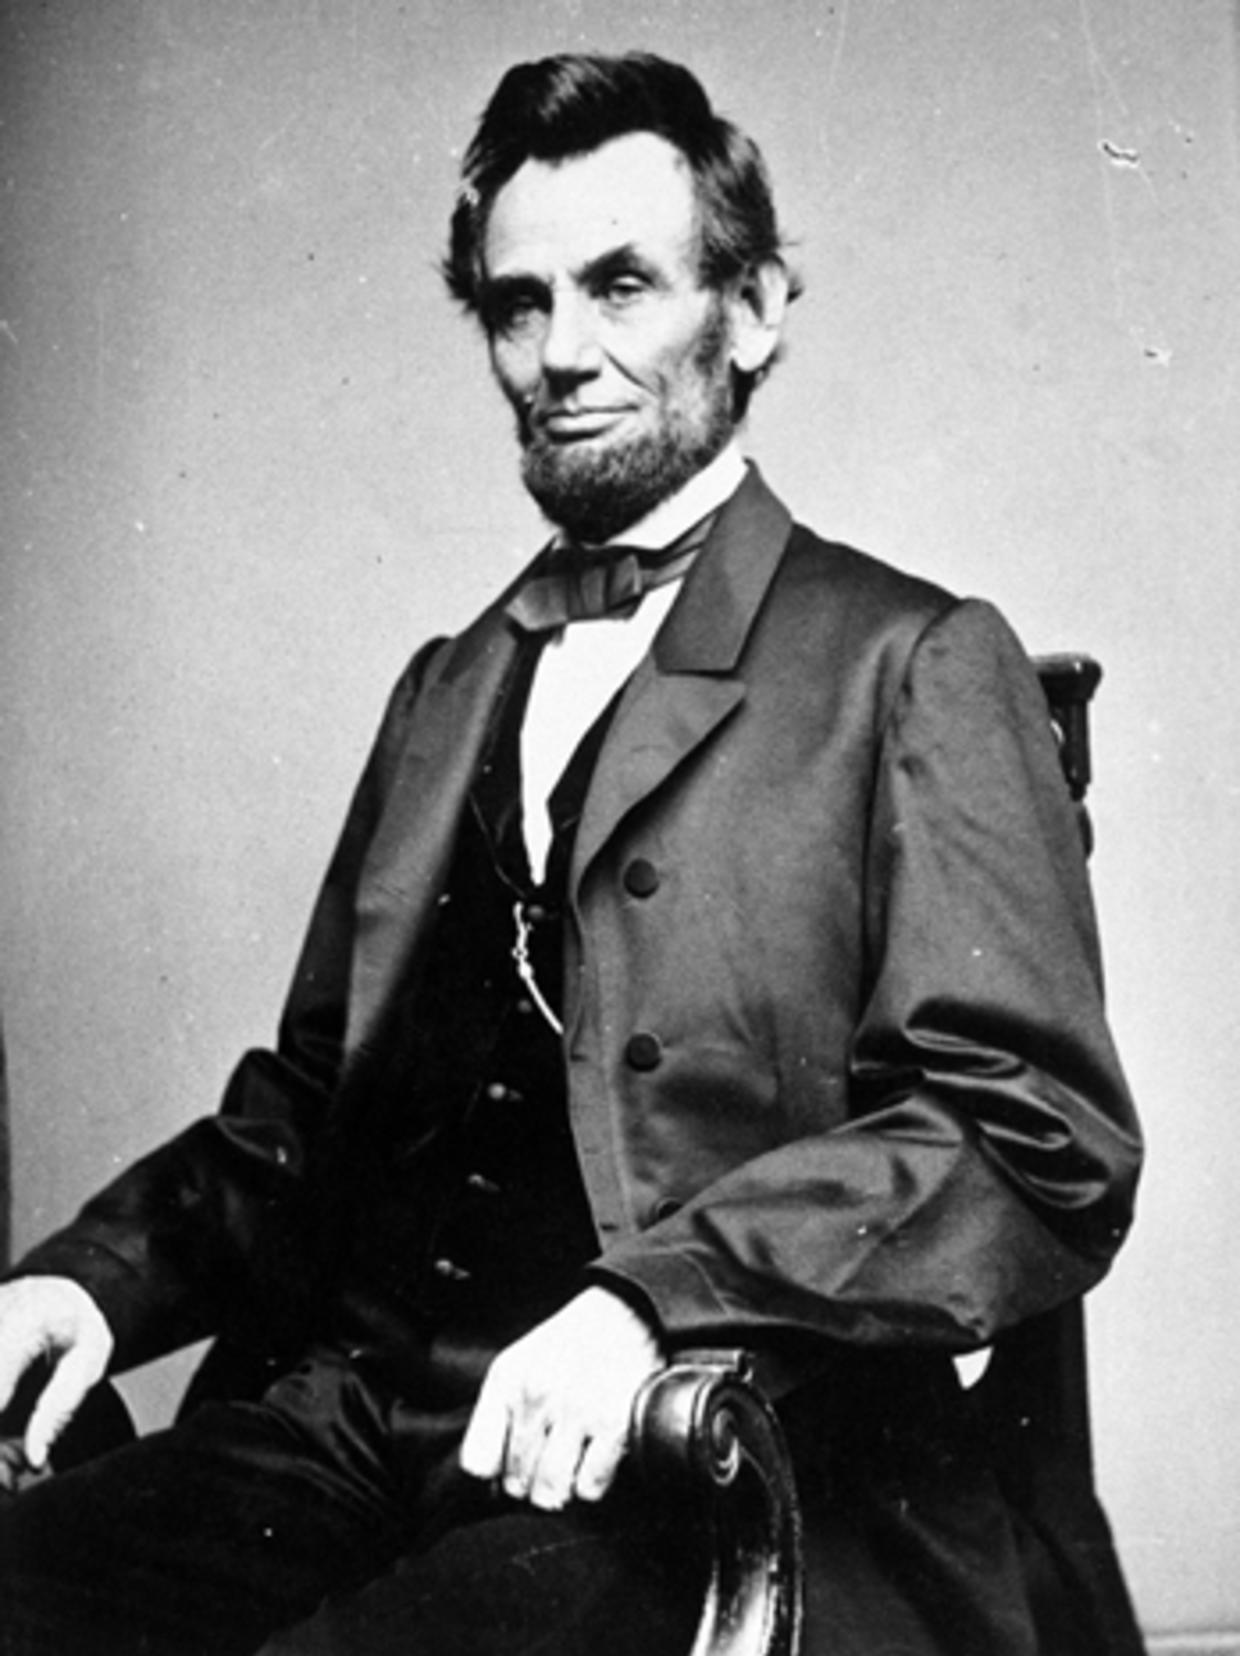 Iconic Abraham Lincoln Portraits Cbs News